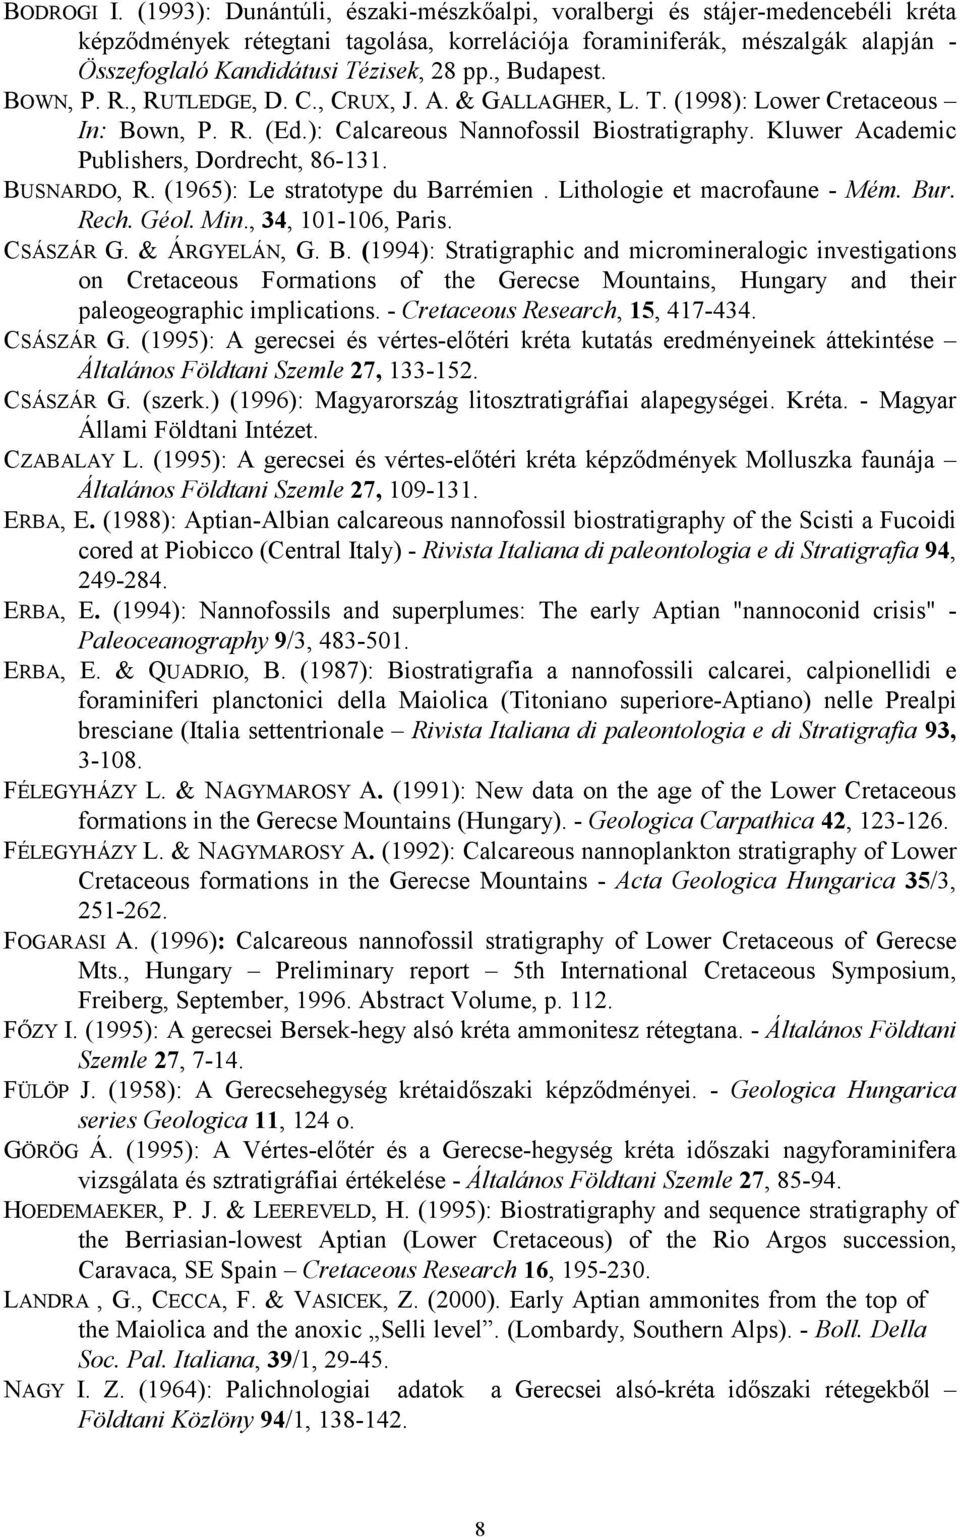 , Budapest. BOWN, P. R., RUTLEDGE, D. C., CRUX, J. A. & GALLAGHER, L. T. (1998): Lower Cretaceous In: Bown, P. R. (Ed.): Calcareous Nannofossil Biostratigraphy.